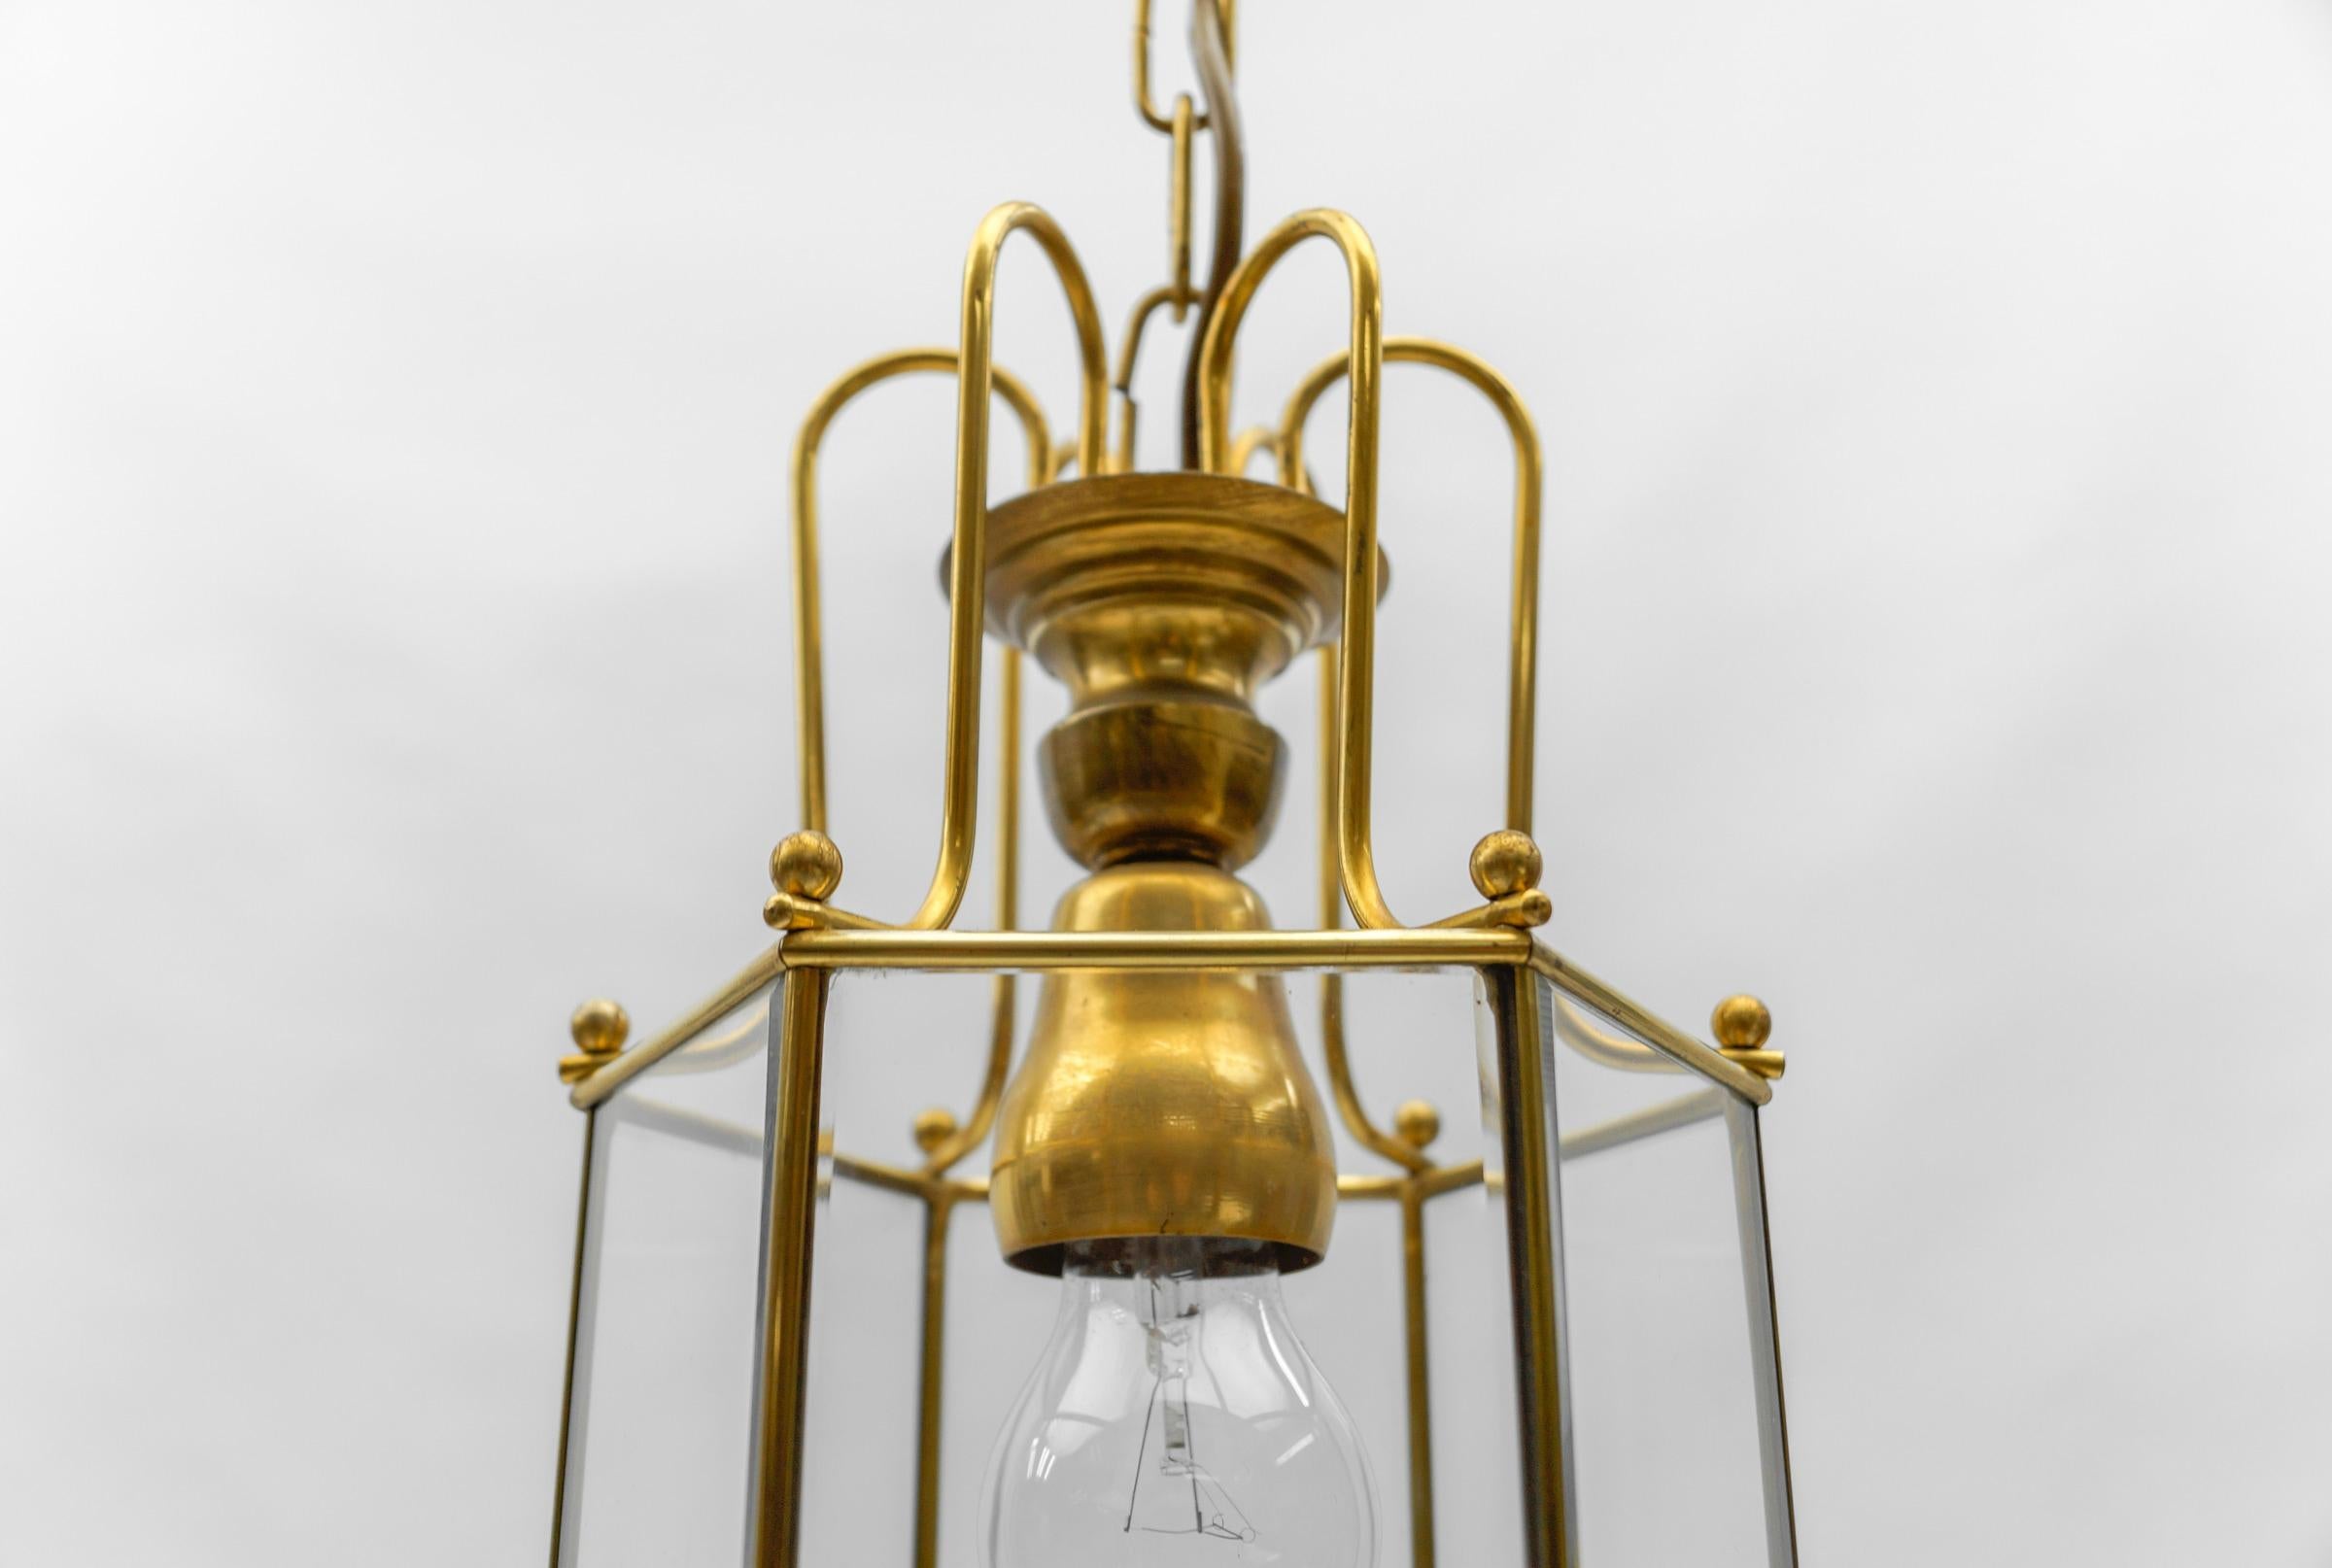 Art Deco Cut Glass Pendant Lamp in Brass, 1940s / 1950s For Sale 3